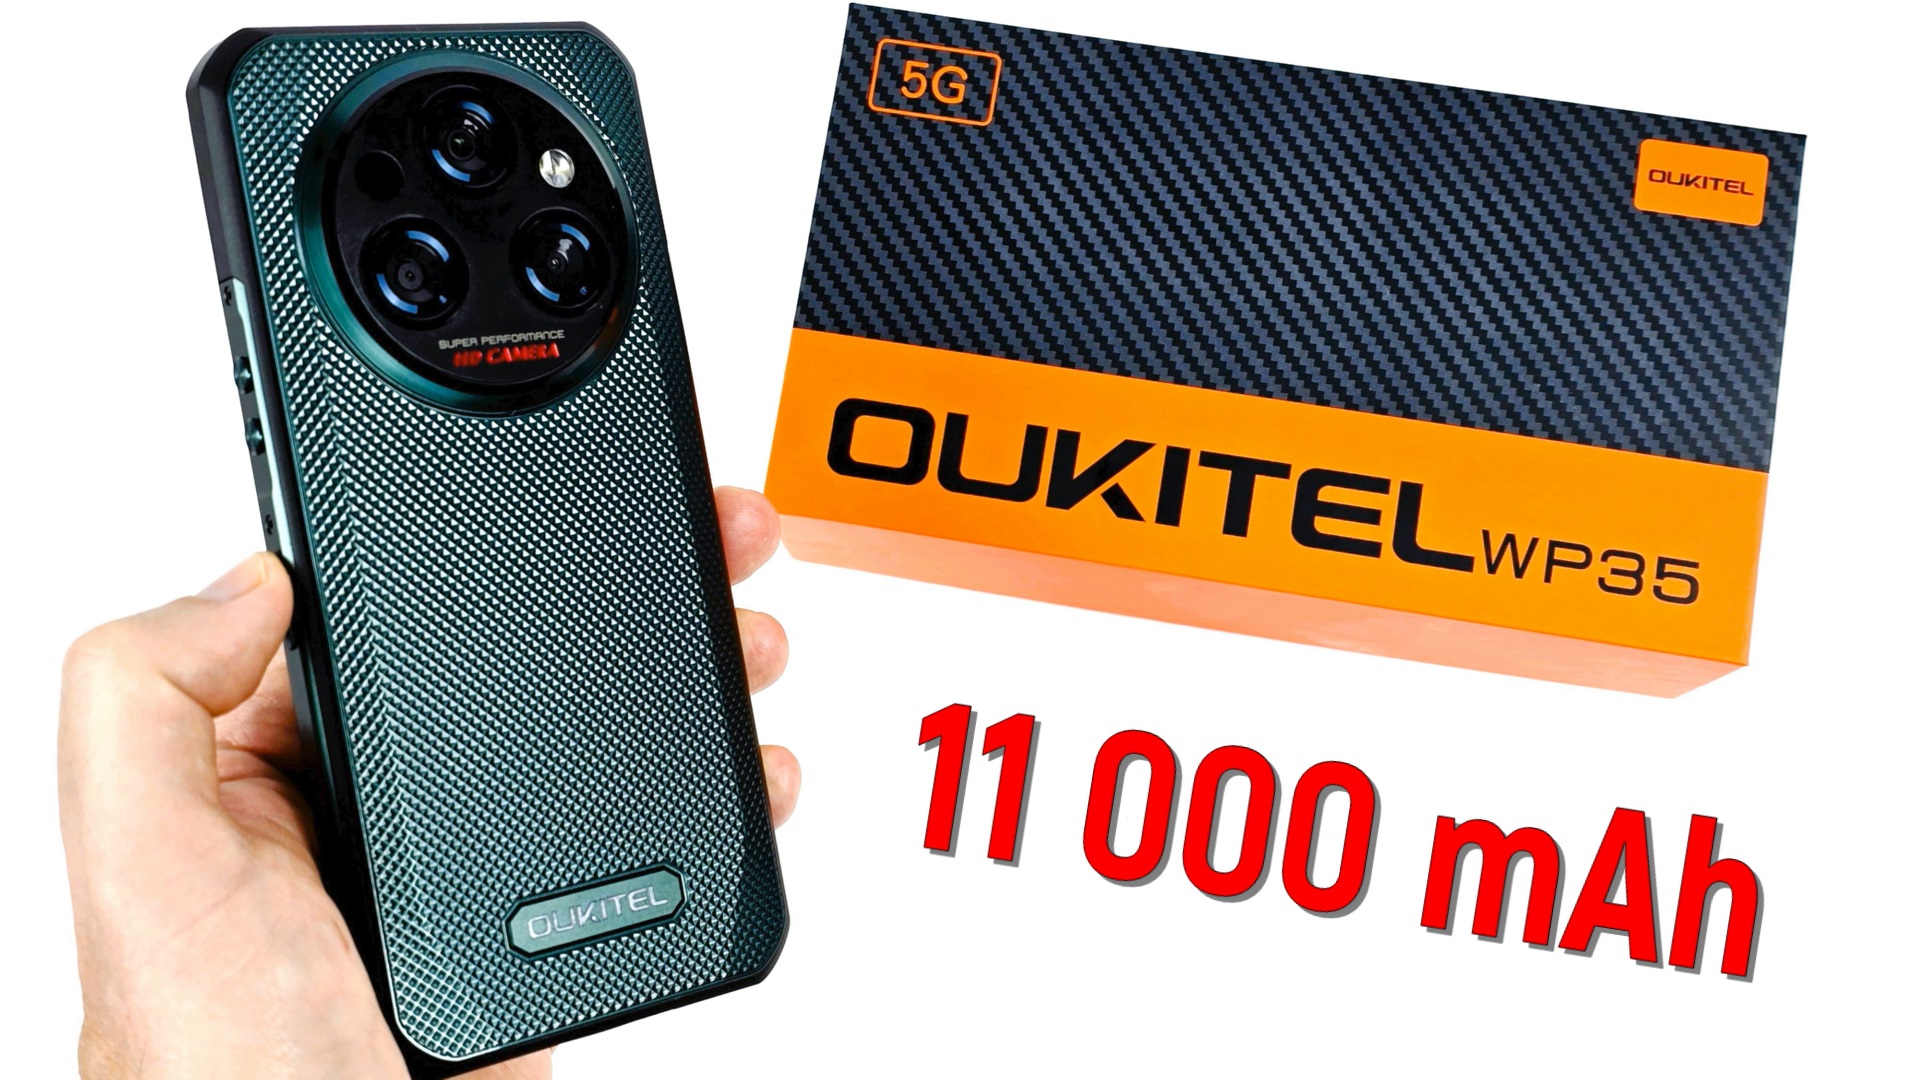 Oukitel WP35: тончайший защищенный смартфон с батареей на 11 000 mAh!